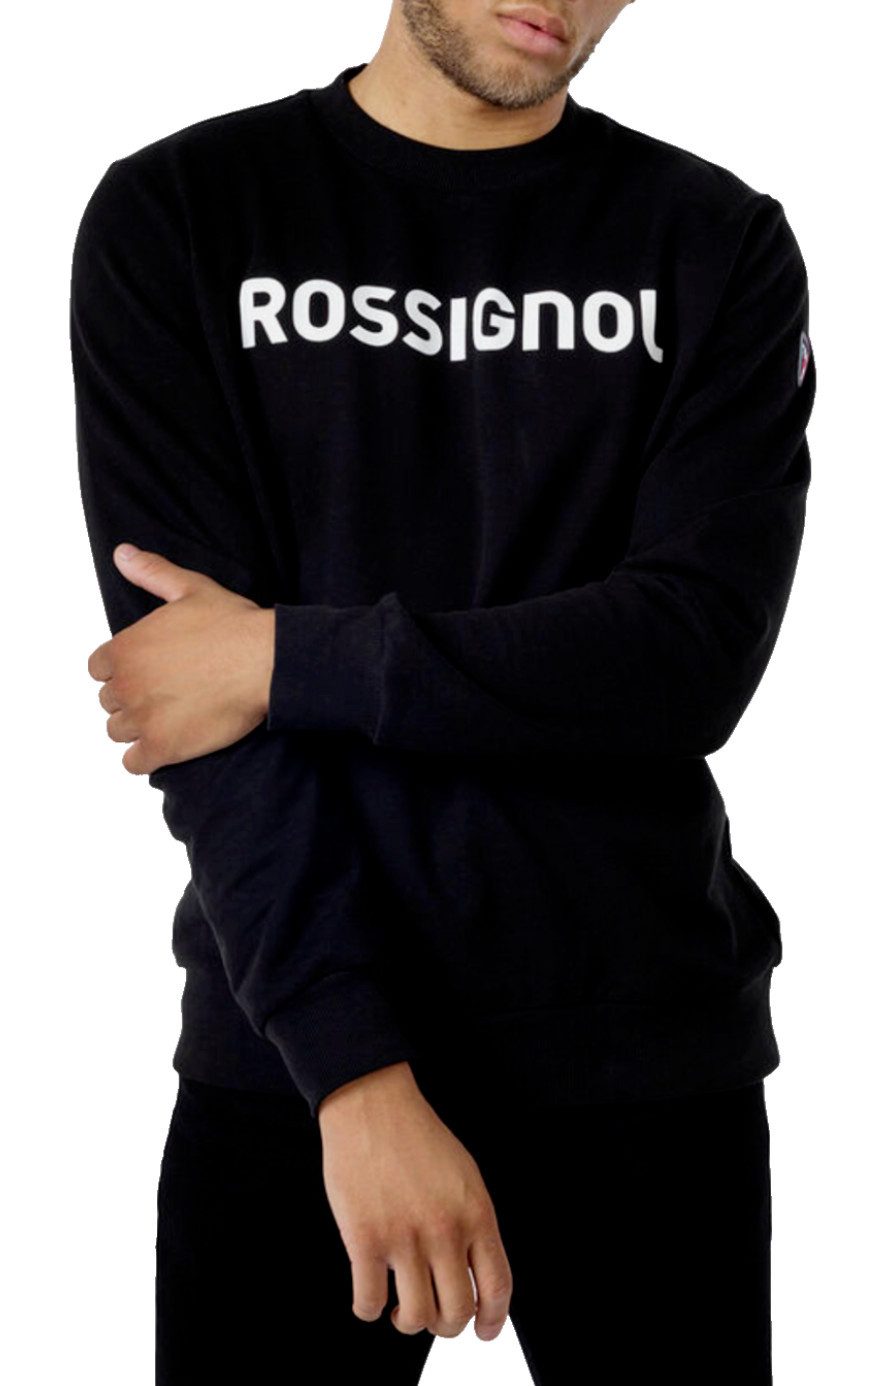 Rossignol Sweatshirt Sweatshirt Pullover Pulli Jumper Sport Logo Sweater